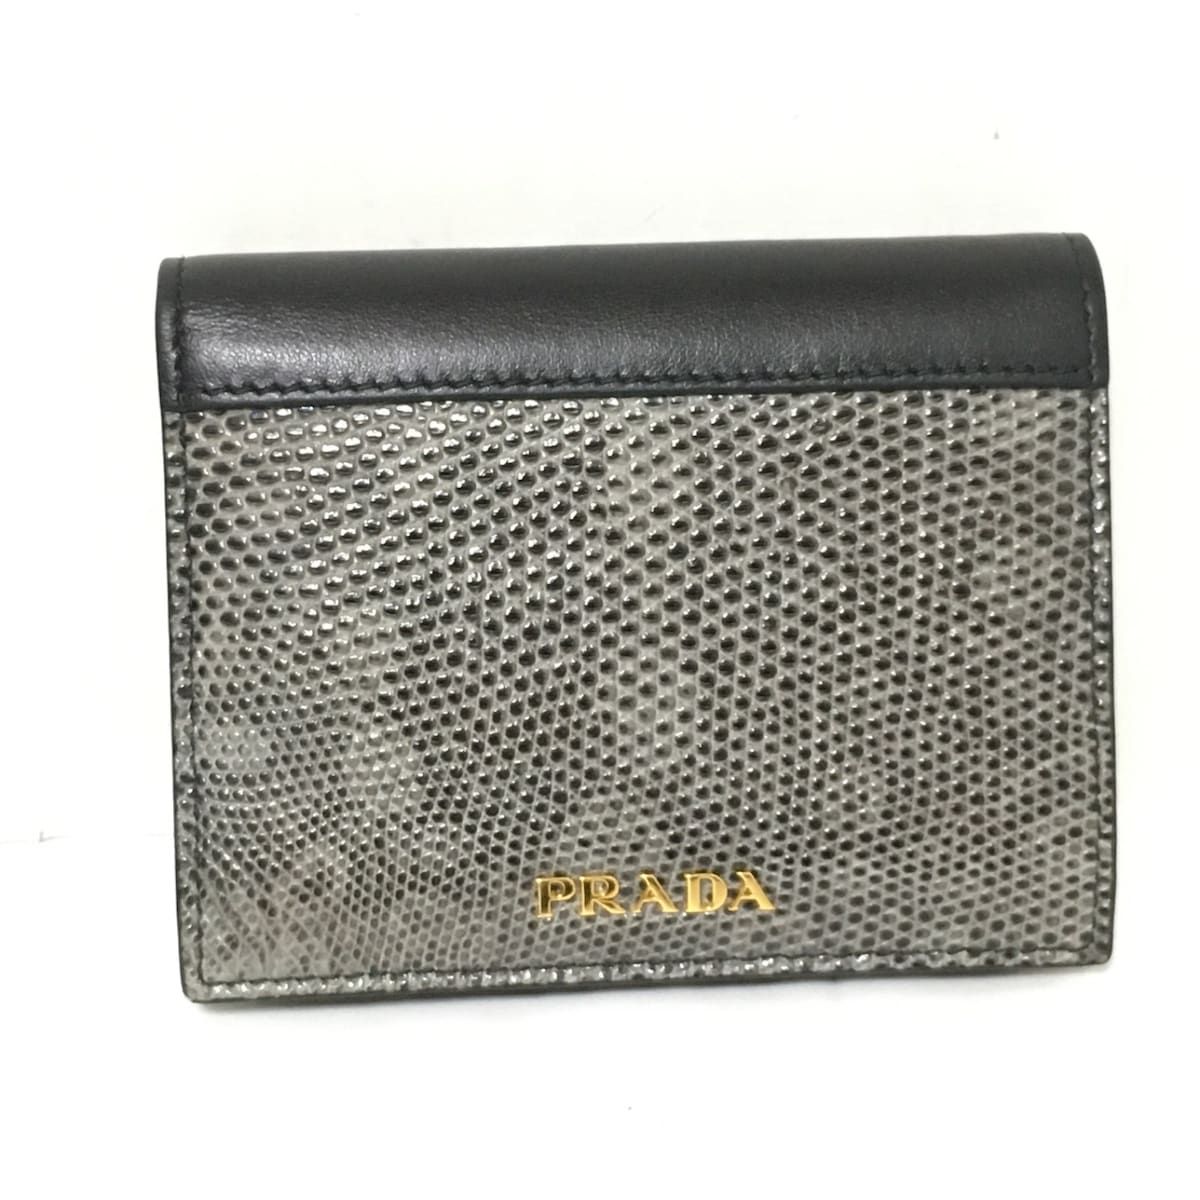 PRADA(プラダ) 2つ折り財布美品 - 1MV204 グレー×黒 レザー - メルカリ